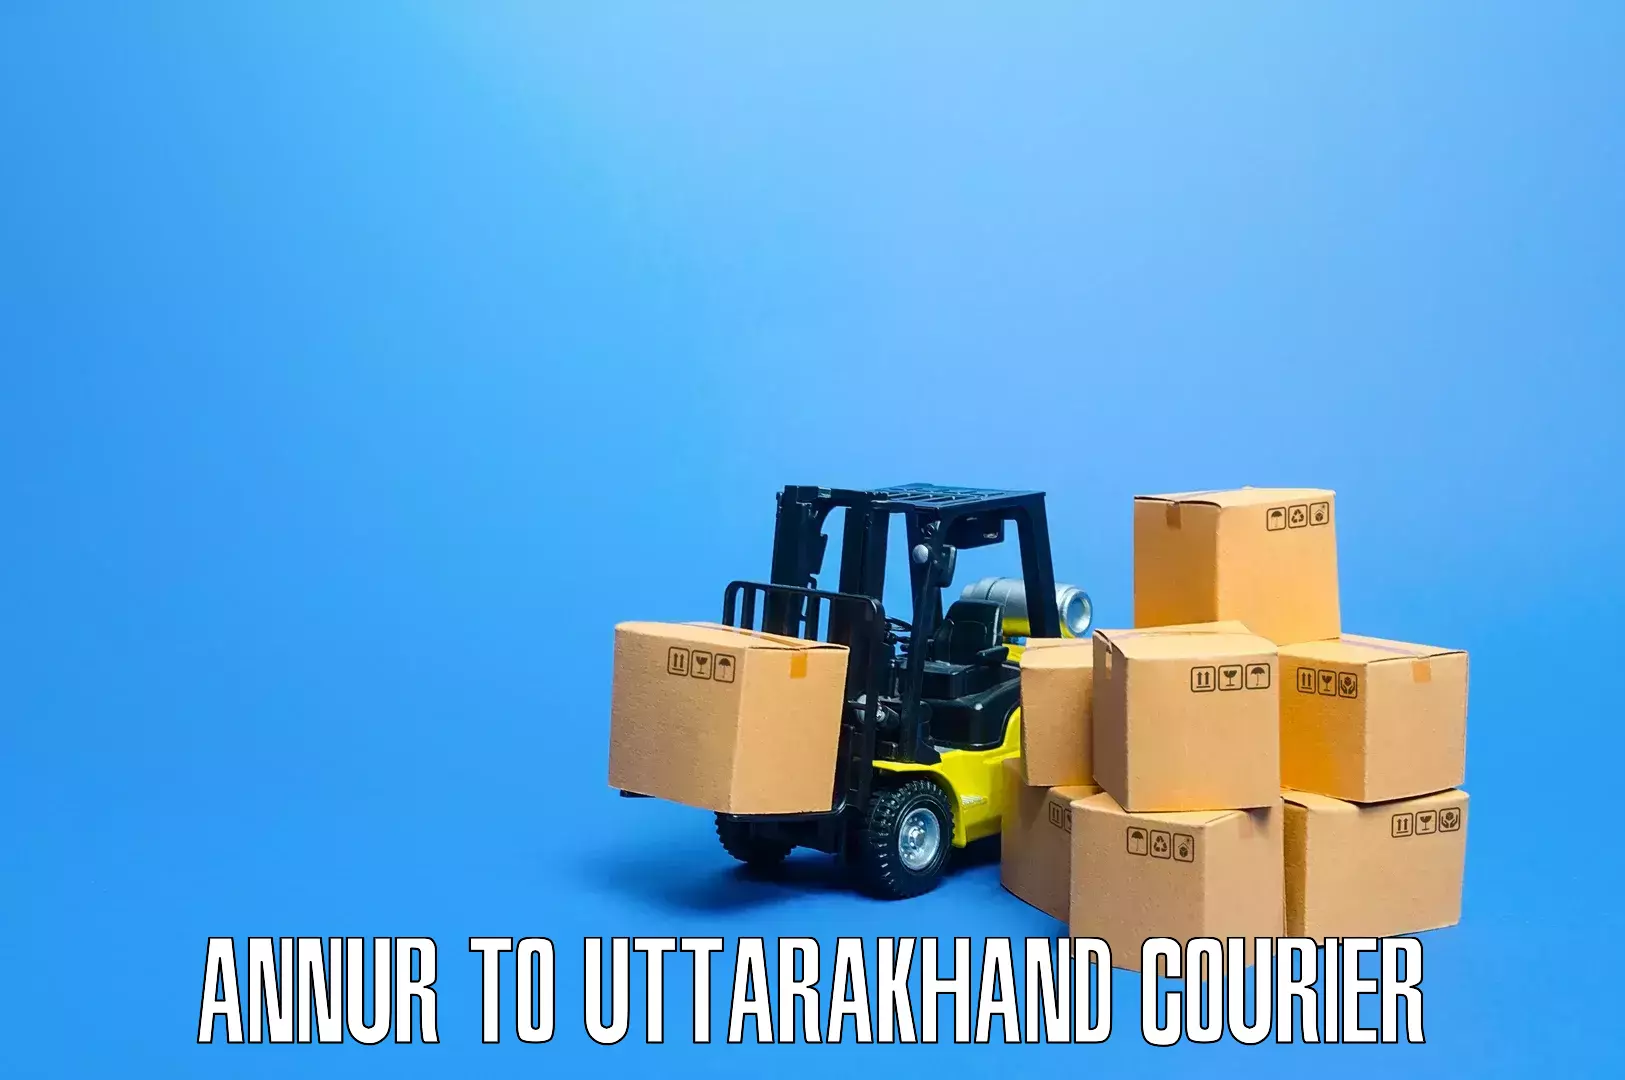 Efficient relocation services in Annur to Uttarkashi